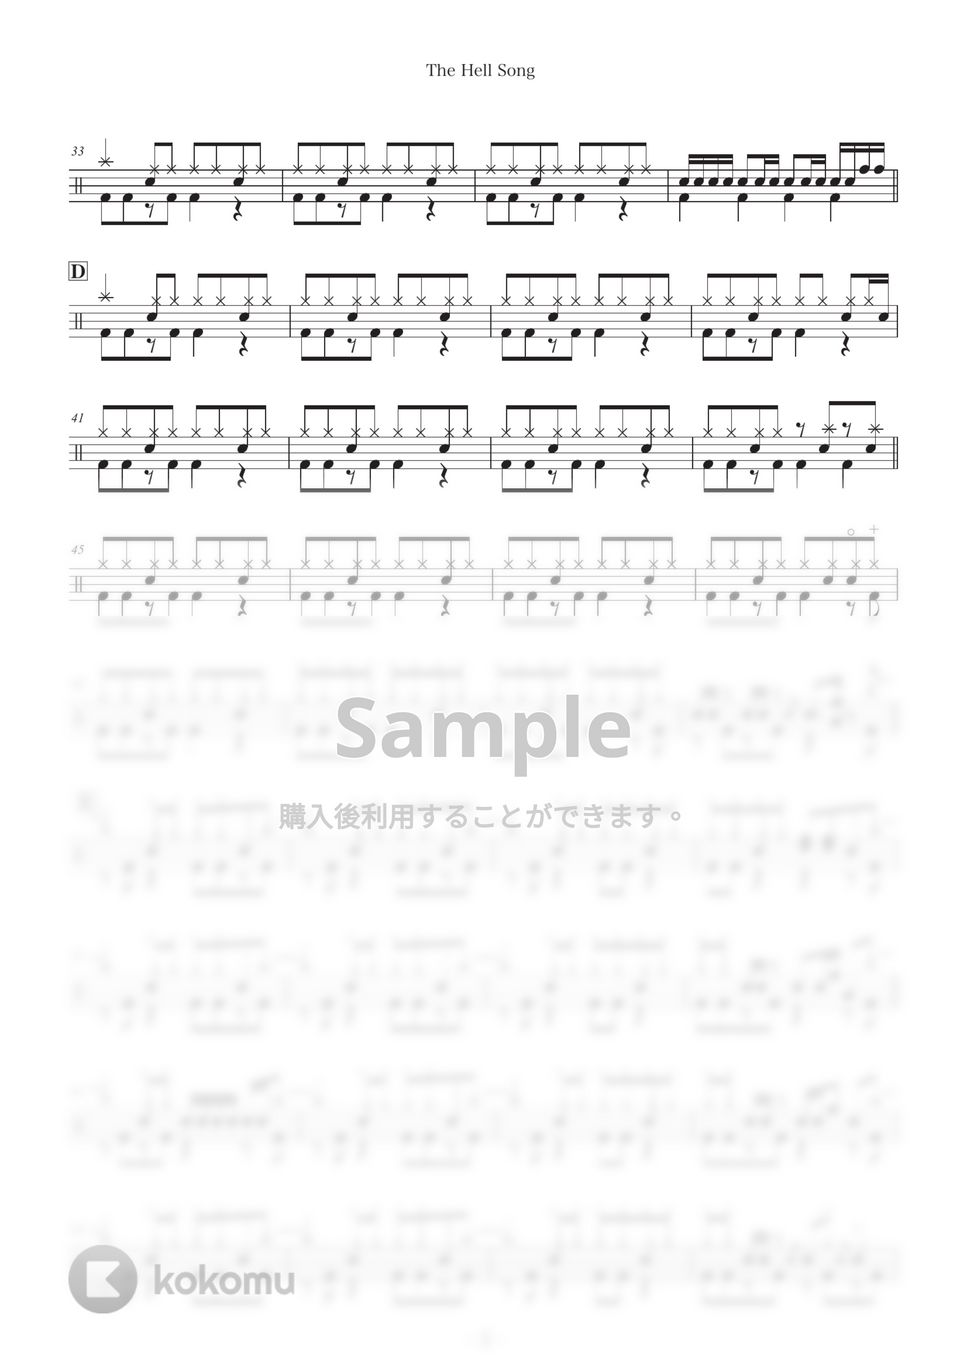 Sum41 - The Hell Song (ドラム) by OKANA